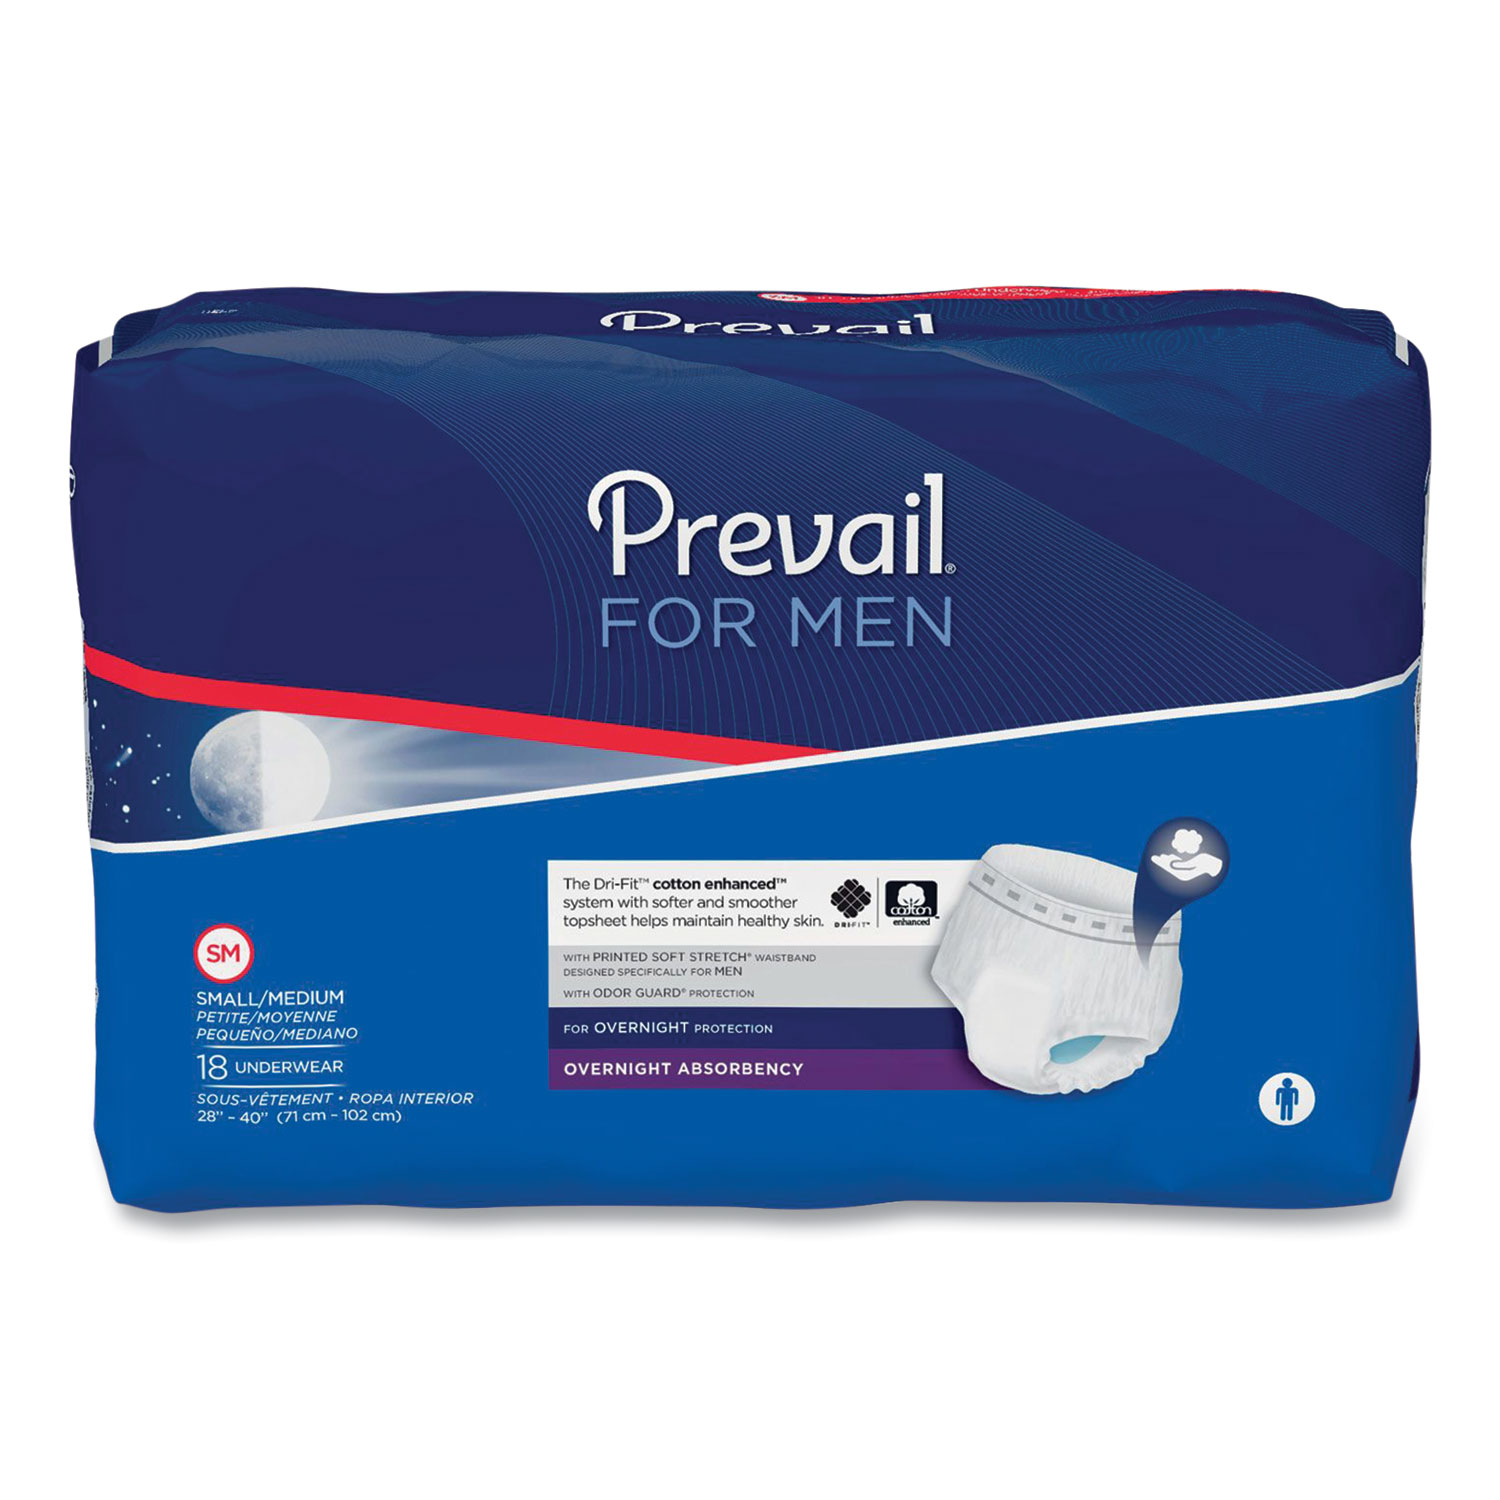  Prevail PMX-512 For Men Overnight Protective Underwear, Small/Medium, 28 to 40 Waist, 72/Carton (PVL2699296) 